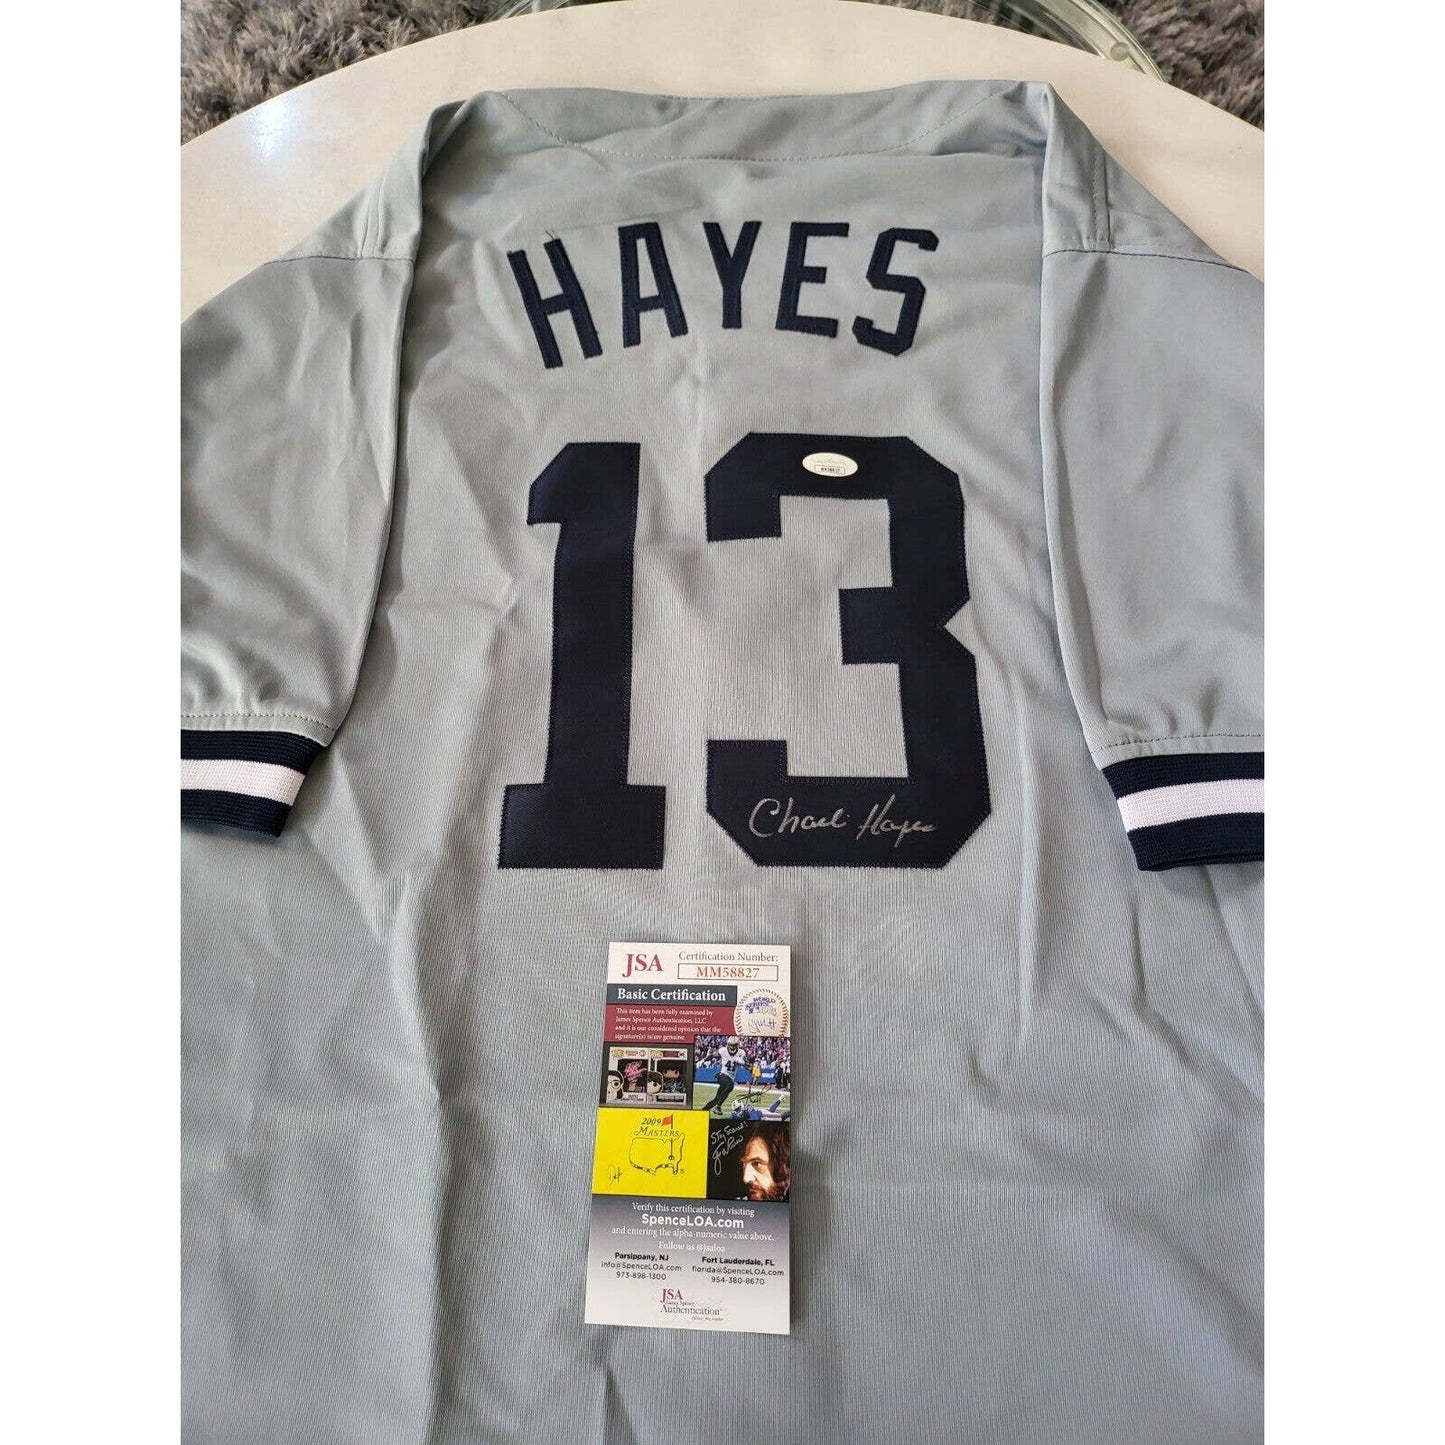 Charlie Hayes Autographed/Signed Jersey JSA COA New York Yankees - TreasuresEvolved